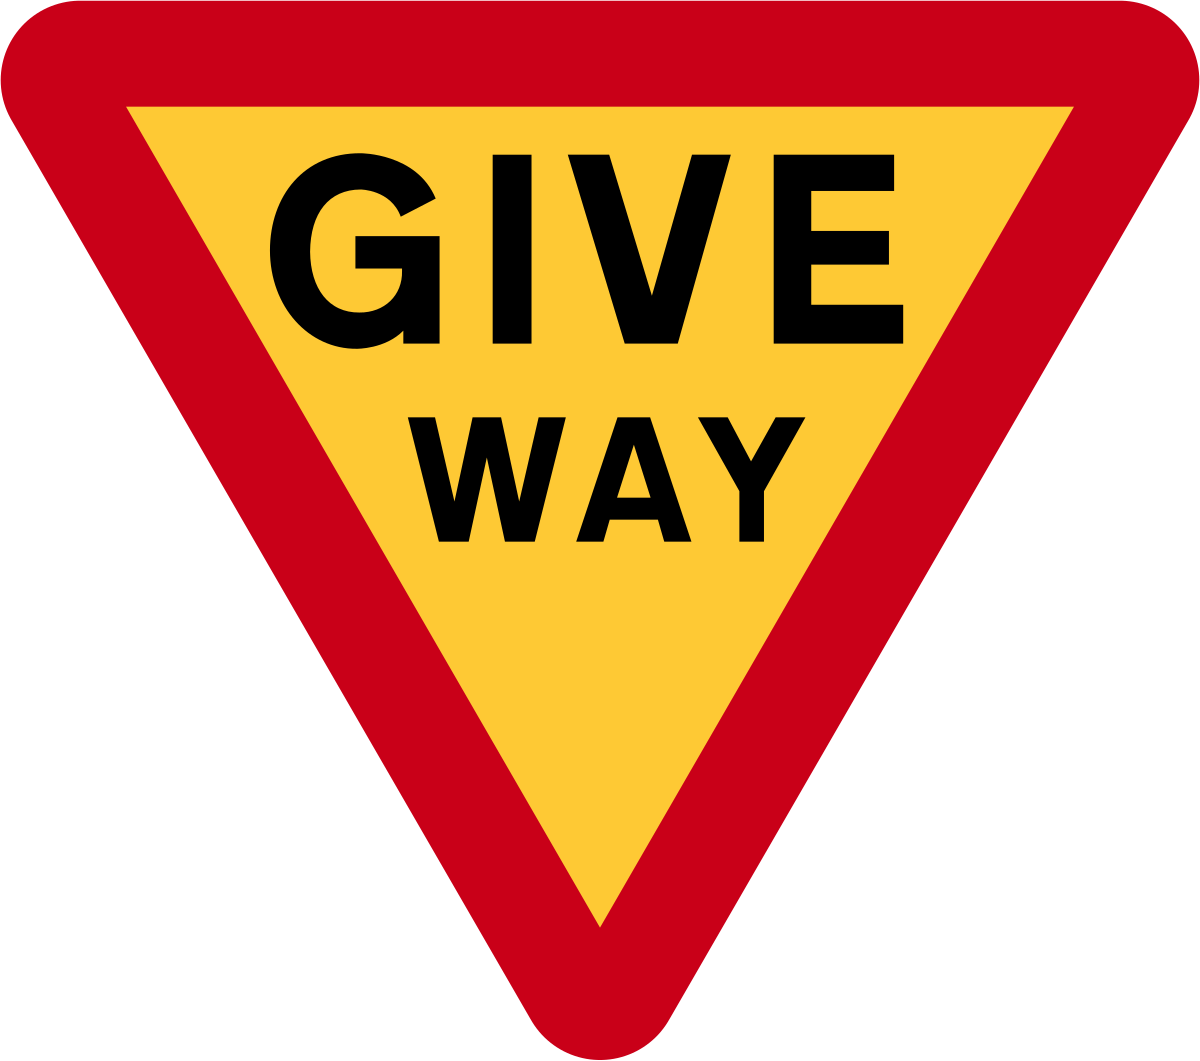 Way sign. Знак give way. Giveaway дорожный знак. Знак Уступи дорогу. Road sign give way.